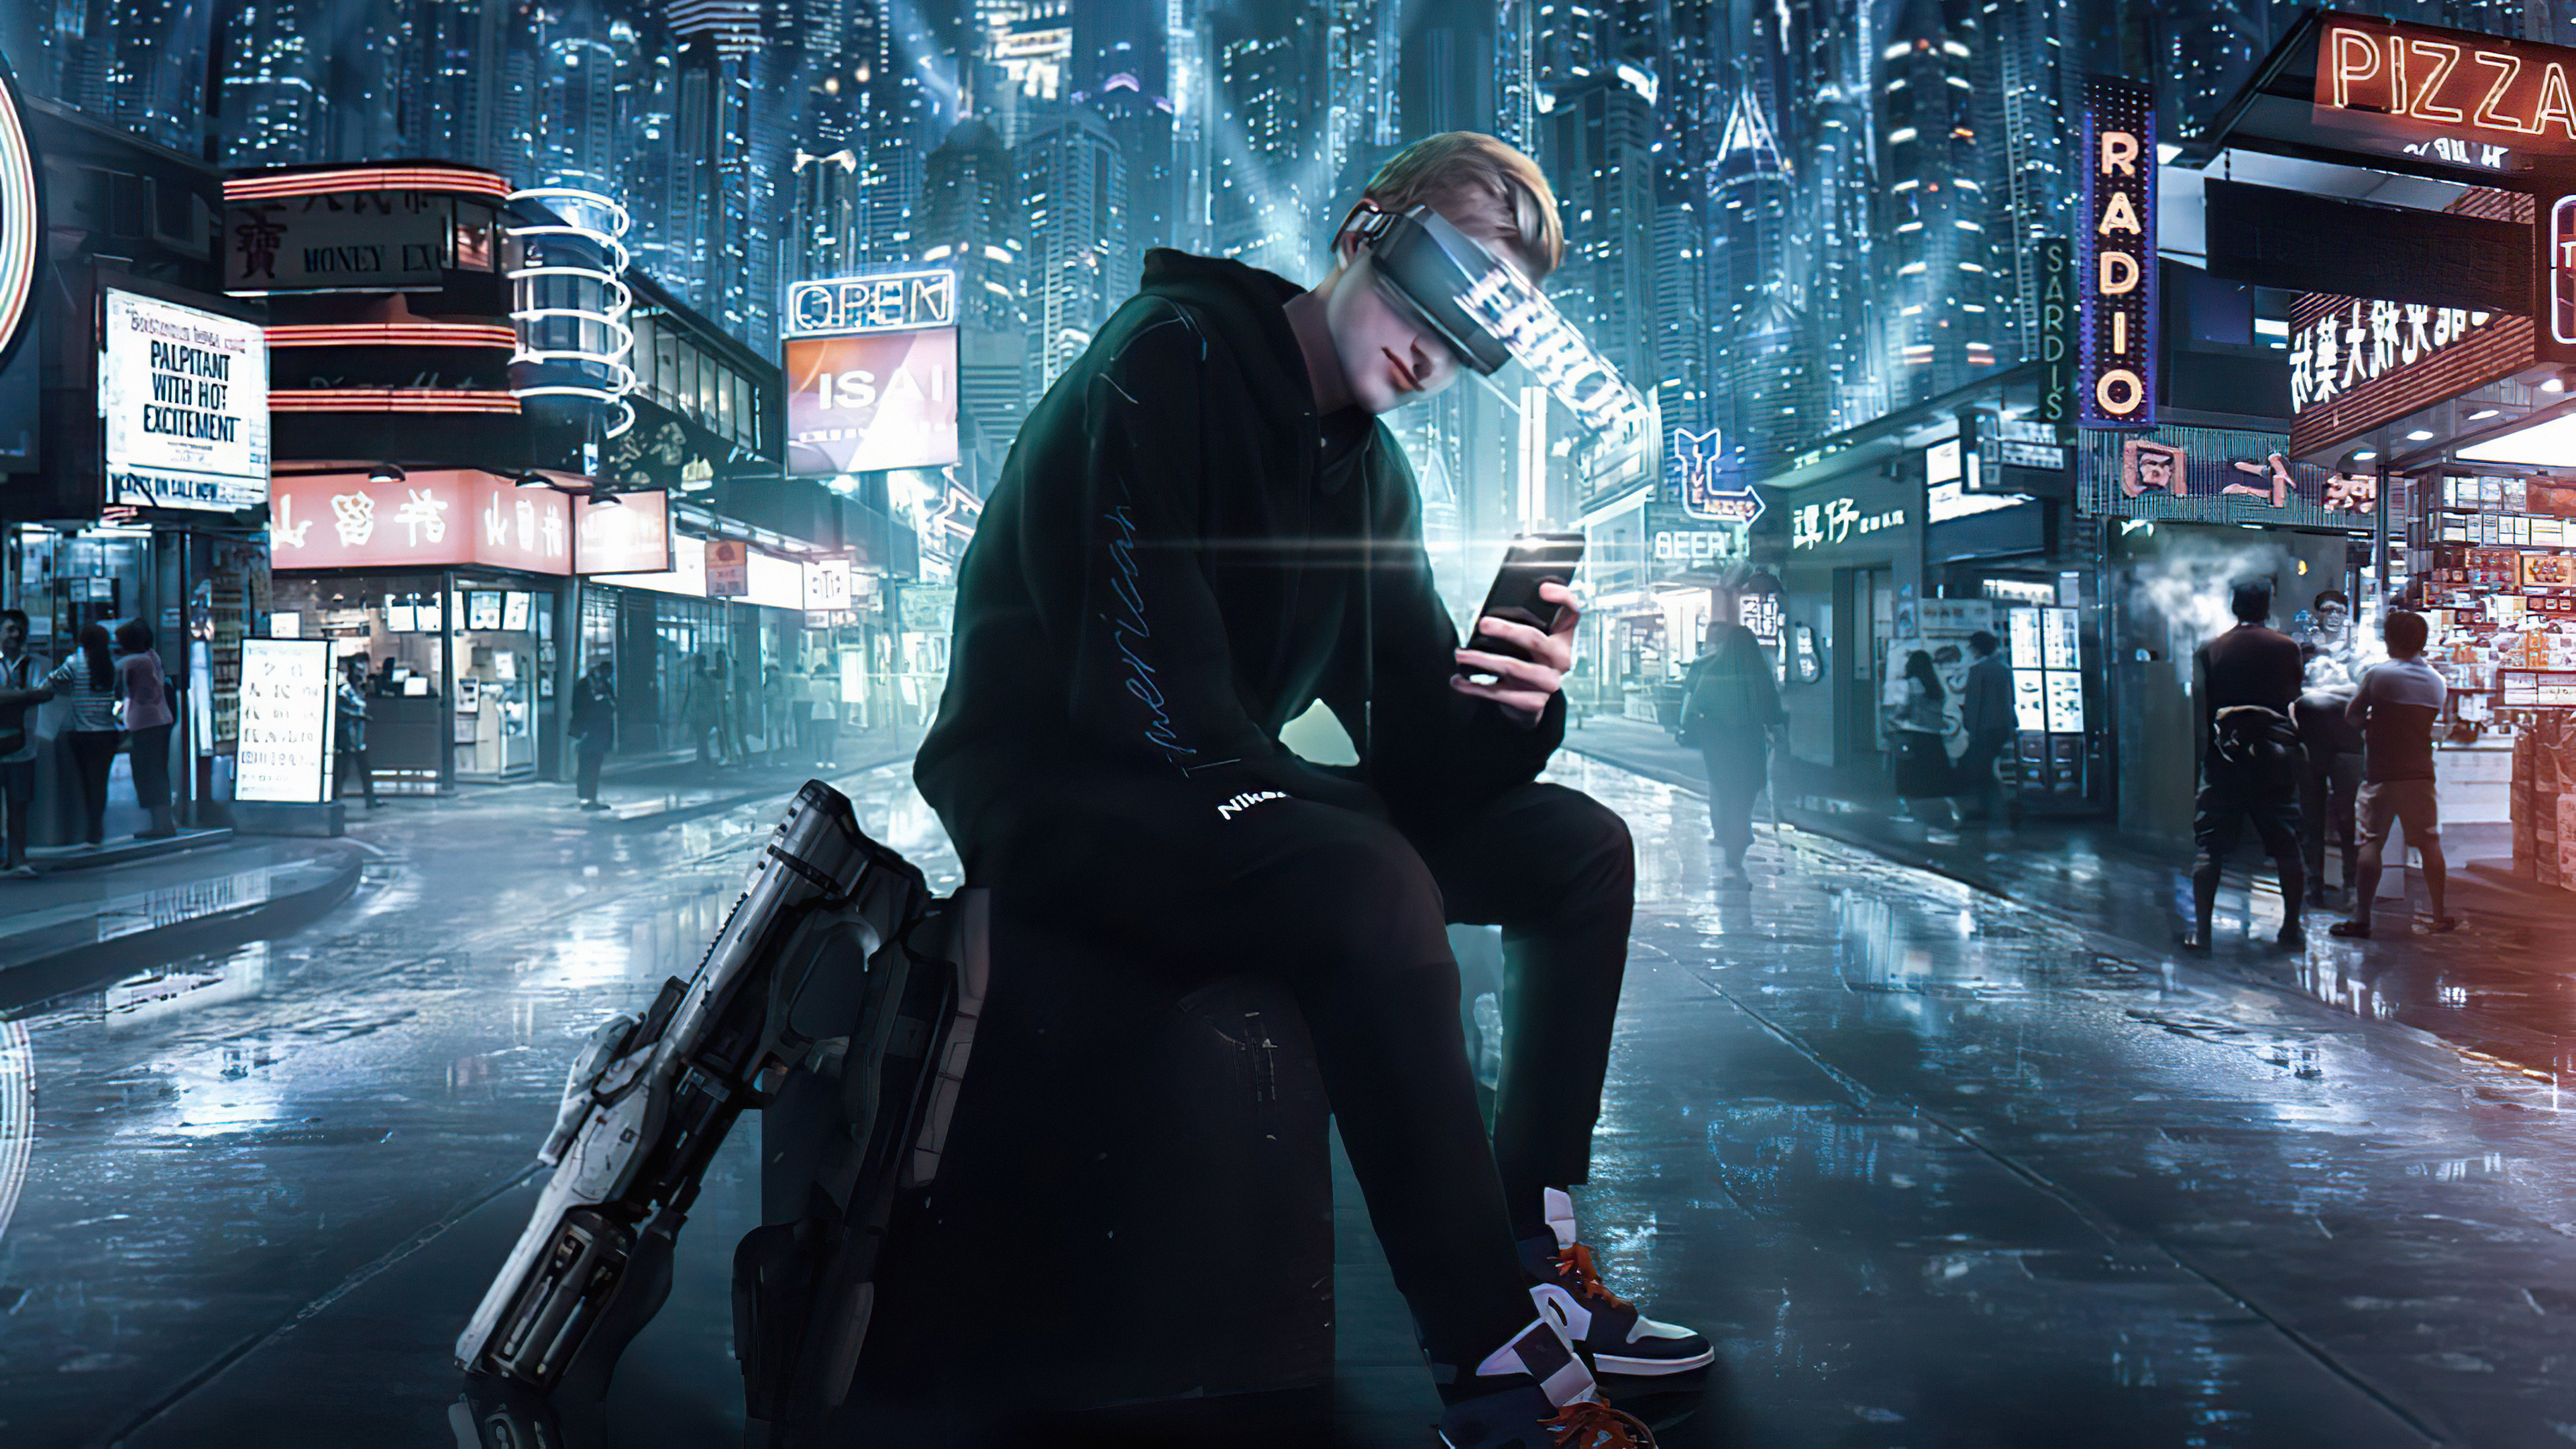 Error In City Cyberpunk Boy 4k, HD Artist, 4k Wallpaper, Image, Background, Photo and Picture